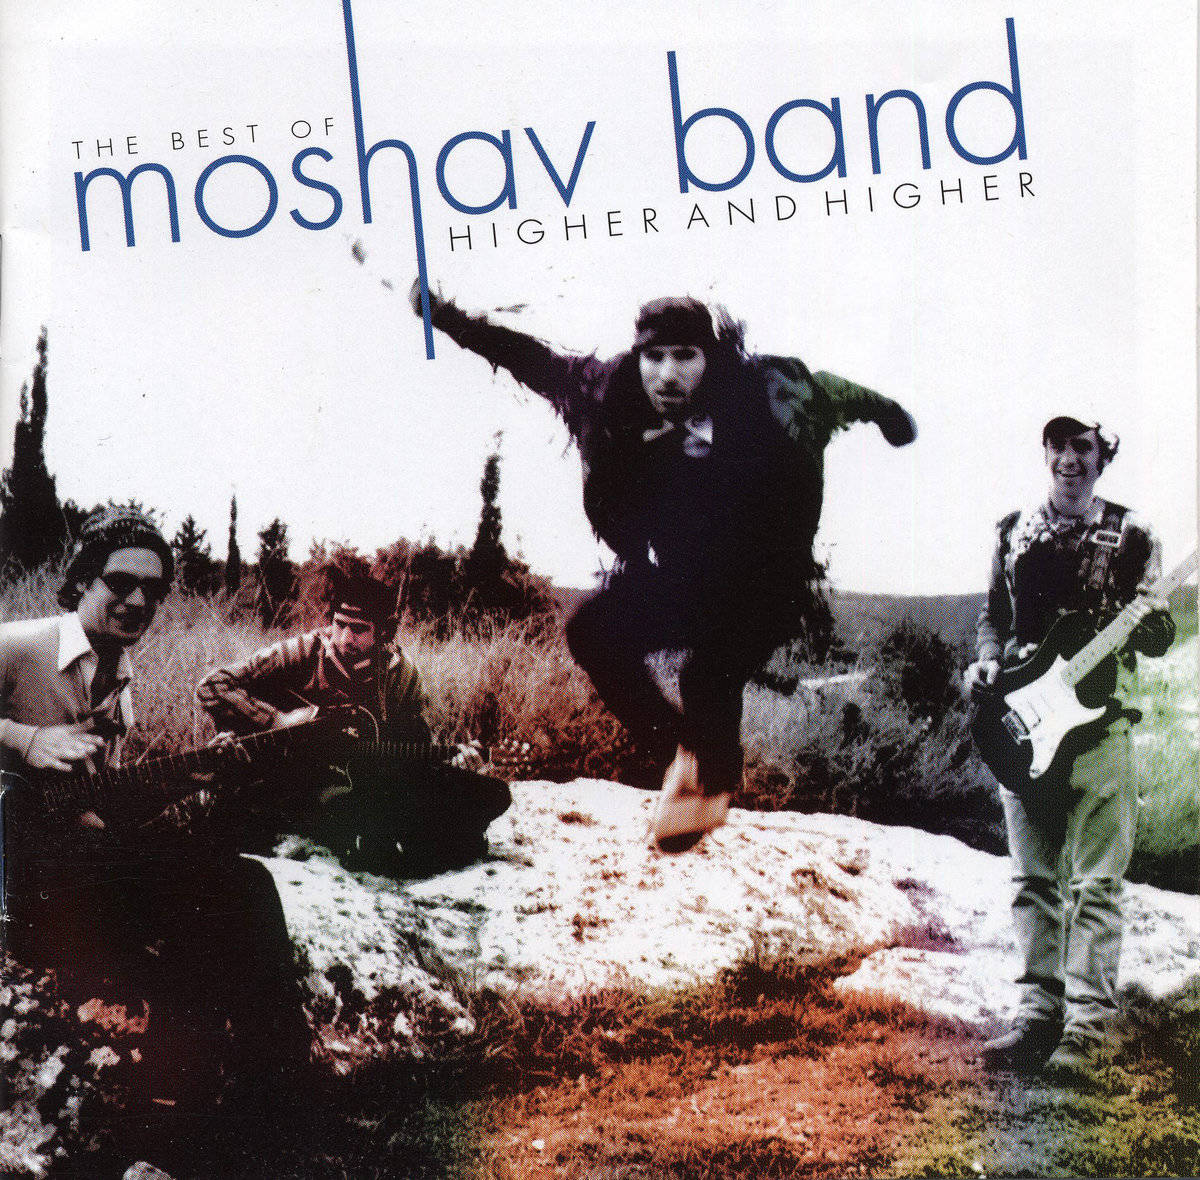 Higher and Higher- Best Of Moshav Band